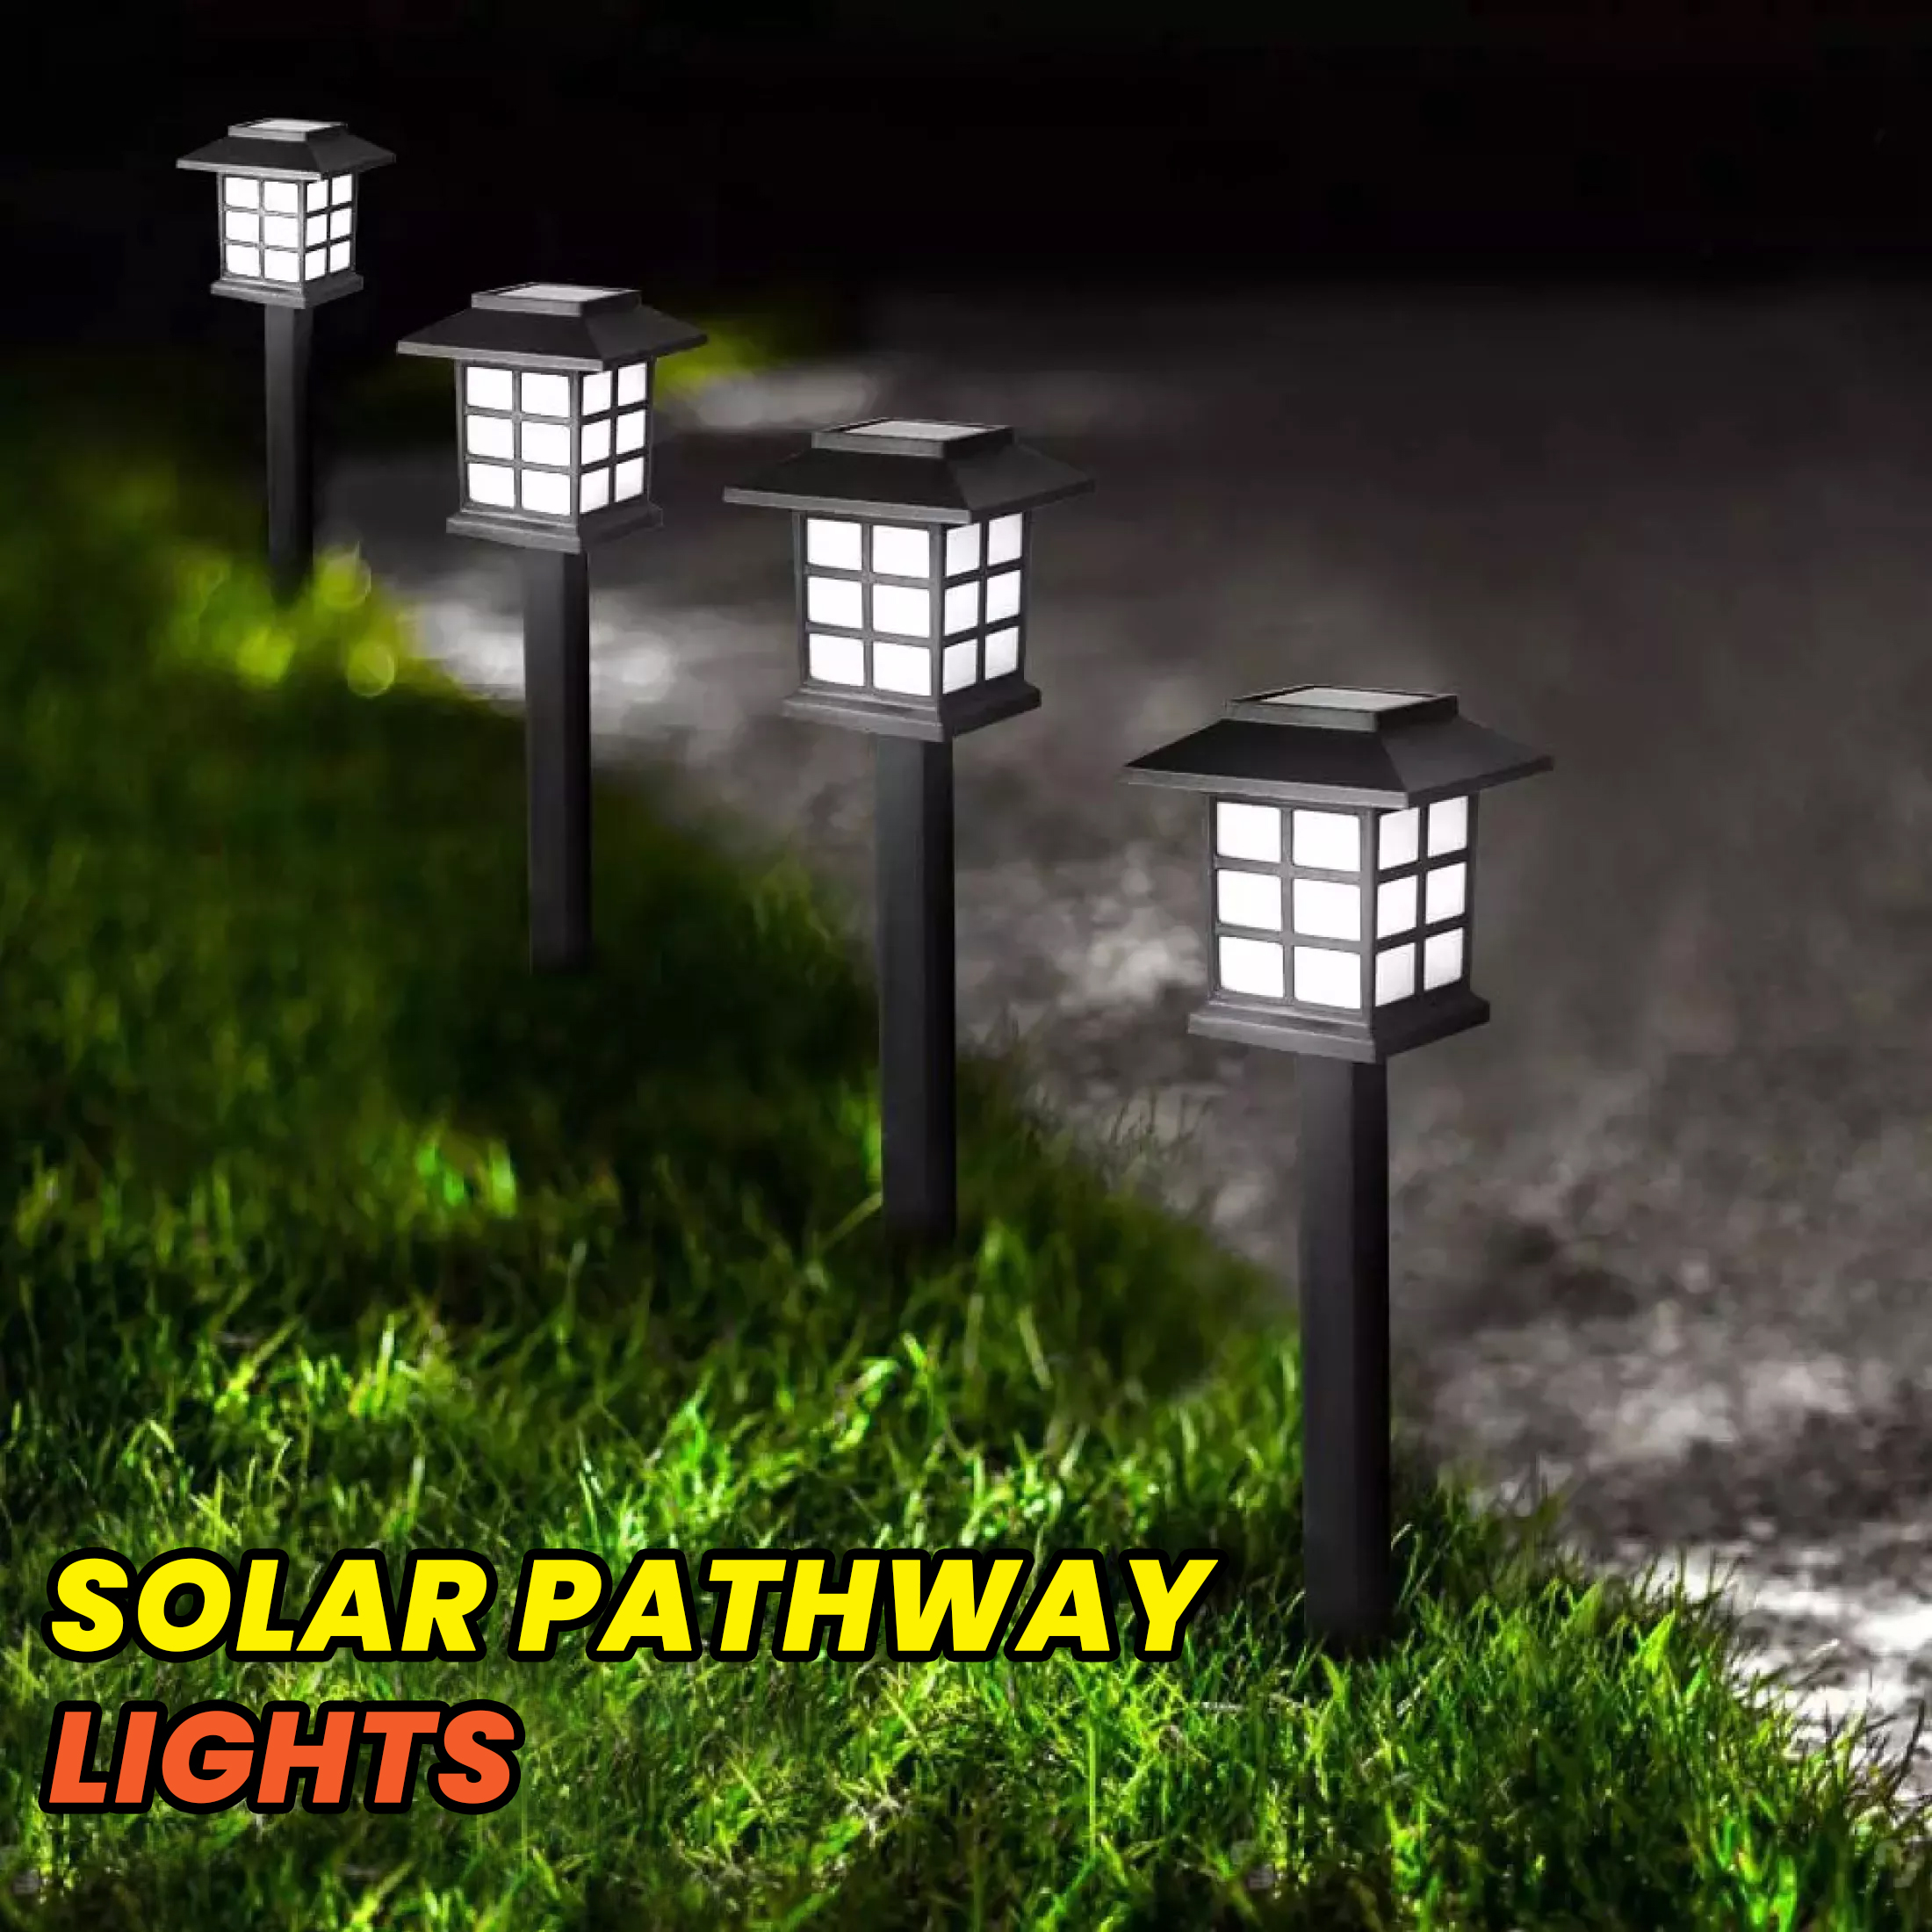 LED Landscape Light Solar Powered Outdoor Garden Path Lawn Yard Lamp Waterproof 